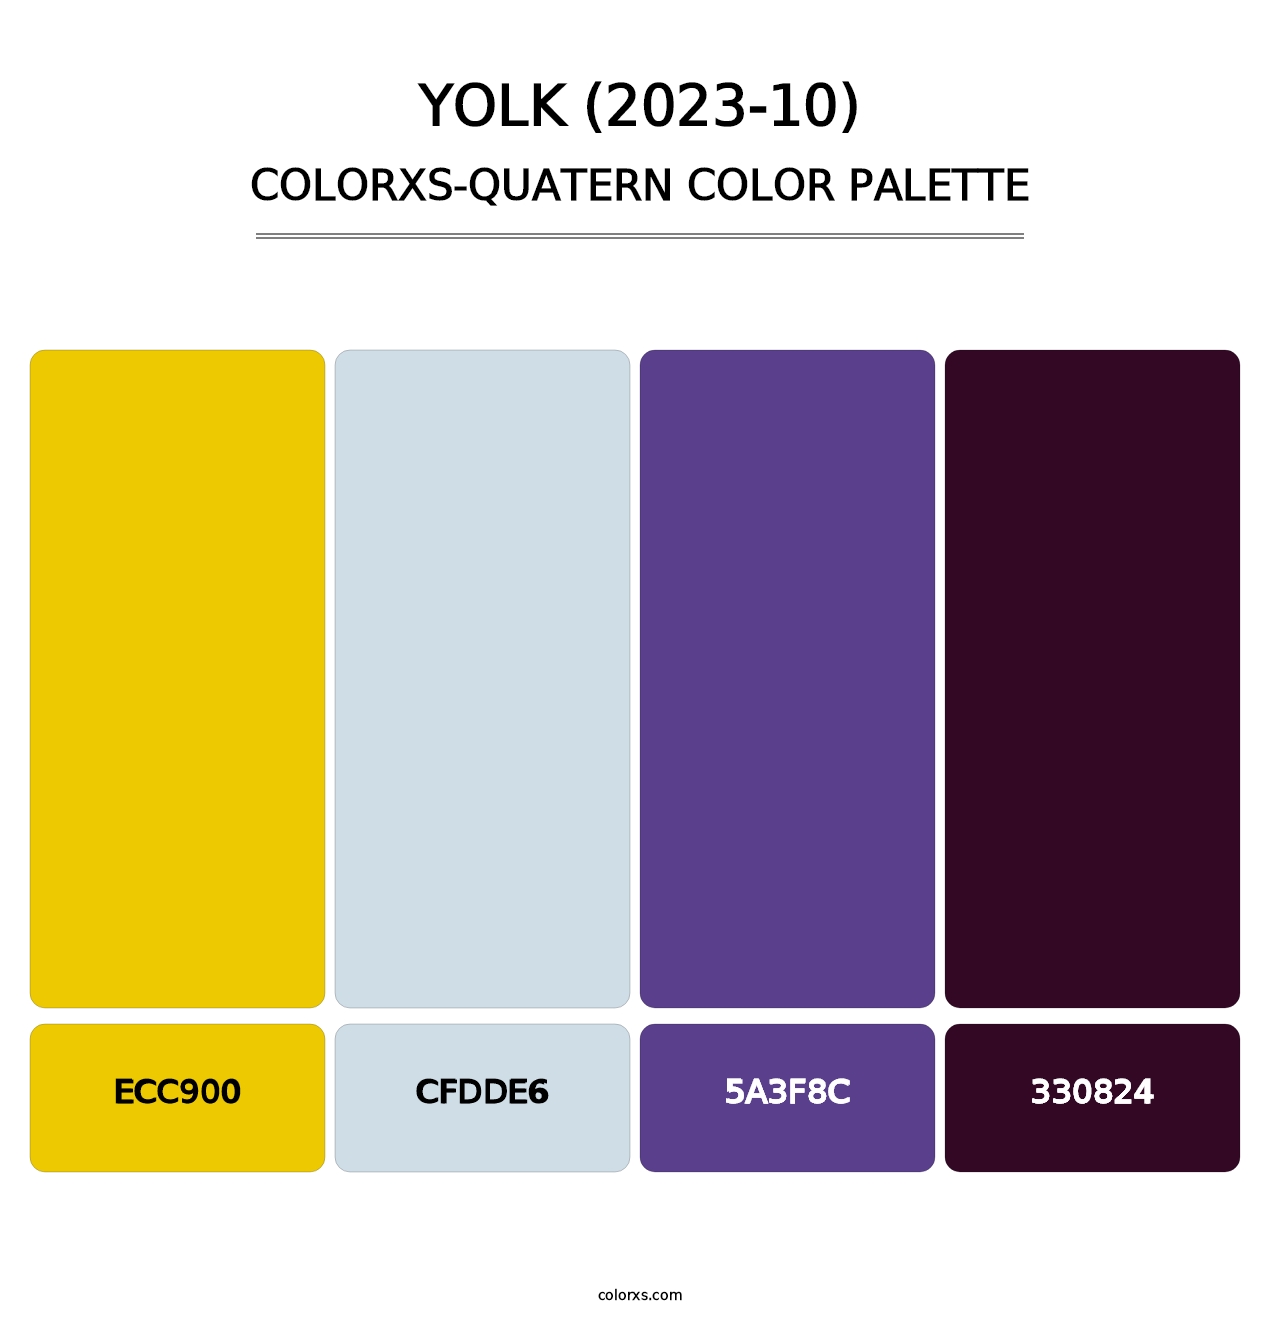 Yolk (2023-10) - Colorxs Quatern Palette